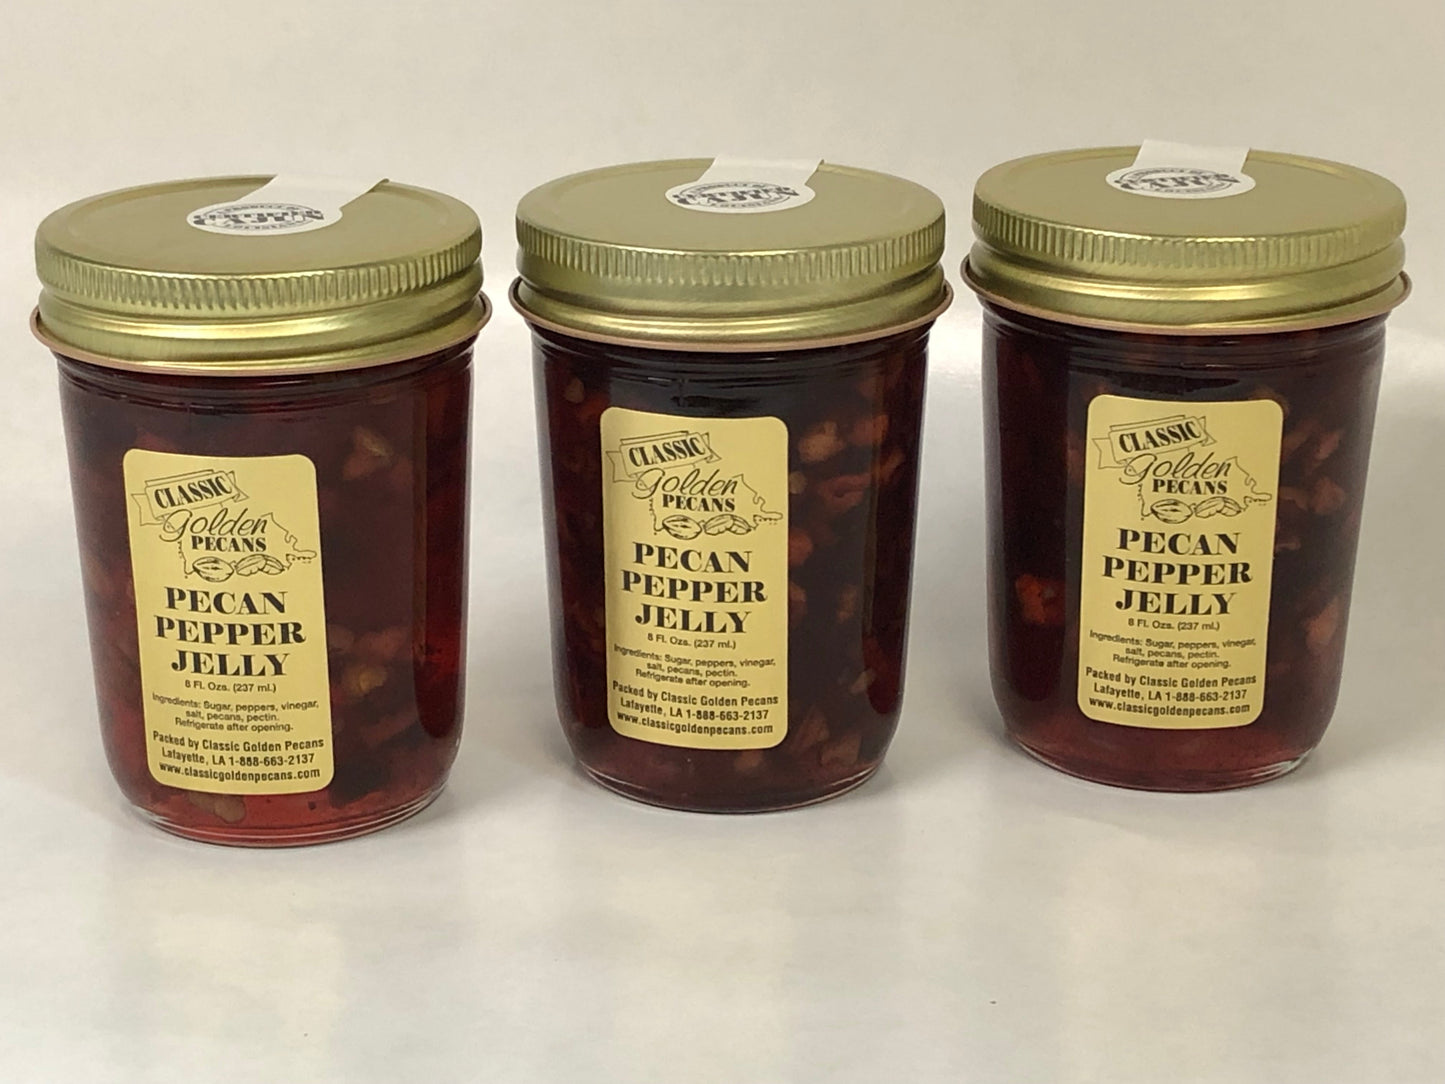 Pecan Pepper Jelly by Classic Golden Pecans